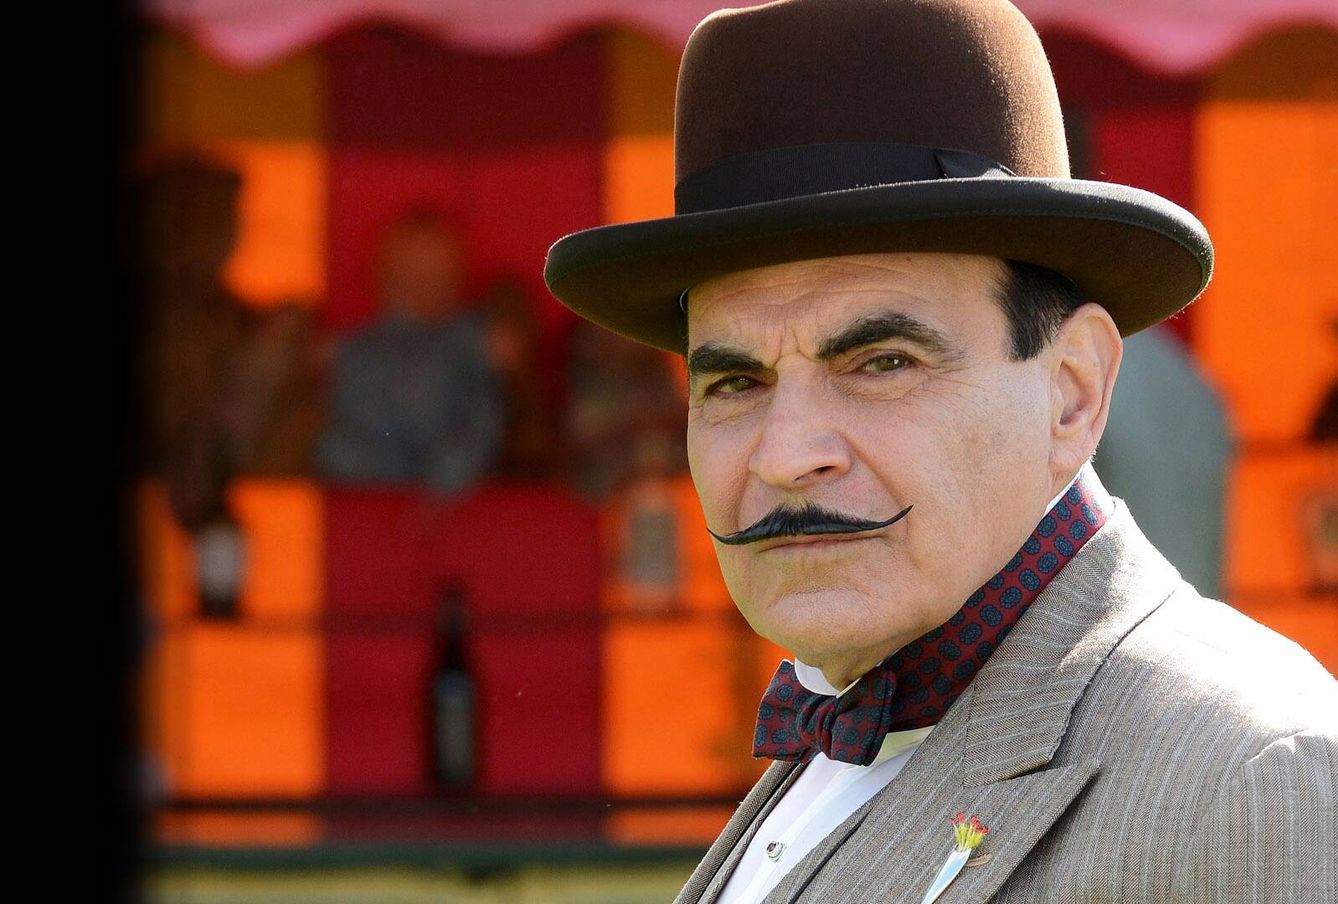 Imagen de 'Poirot'. (Amazon Prime Video)